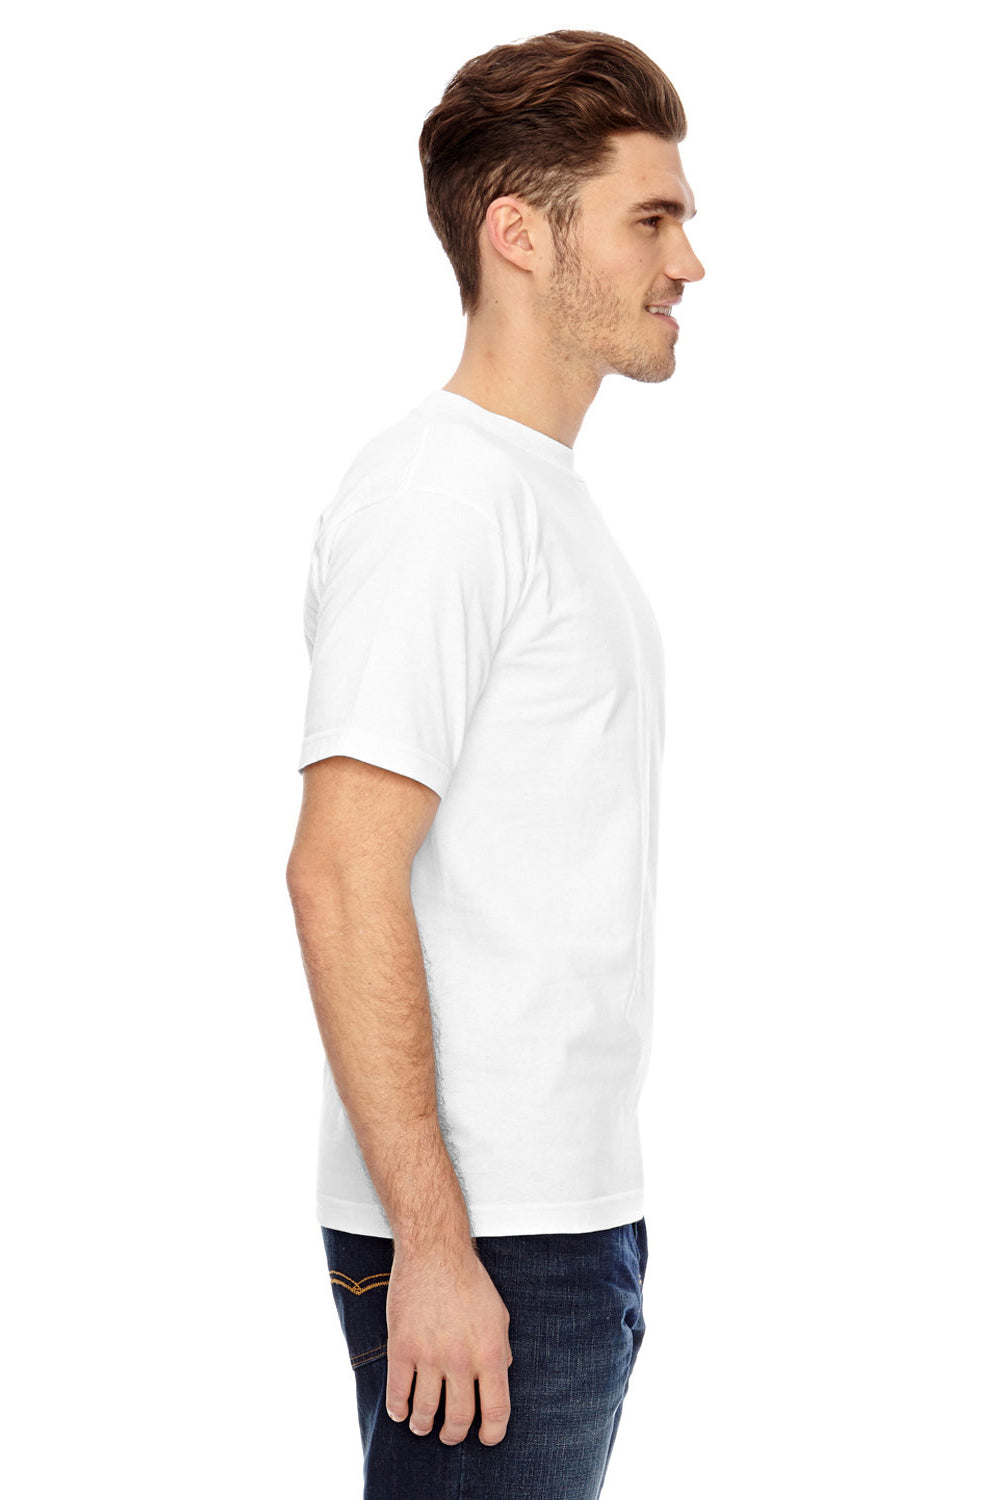 Bayside BA7100 Mens USA Made Short Sleeve Crewneck T-Shirt w/ Pocket White Model Side